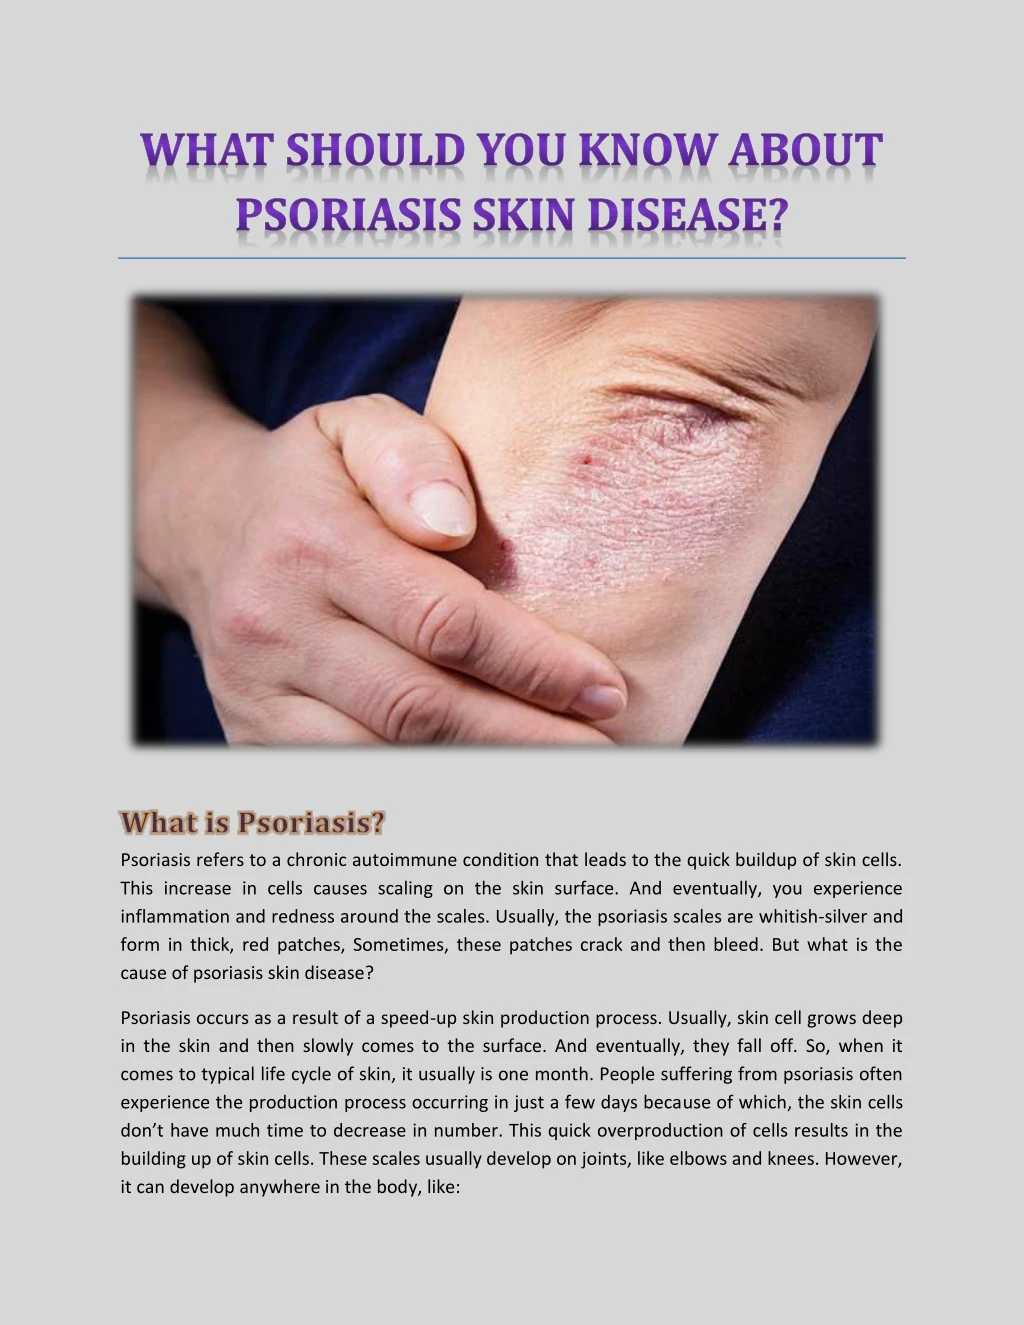 psoriasis refers to a chronic autoimmune